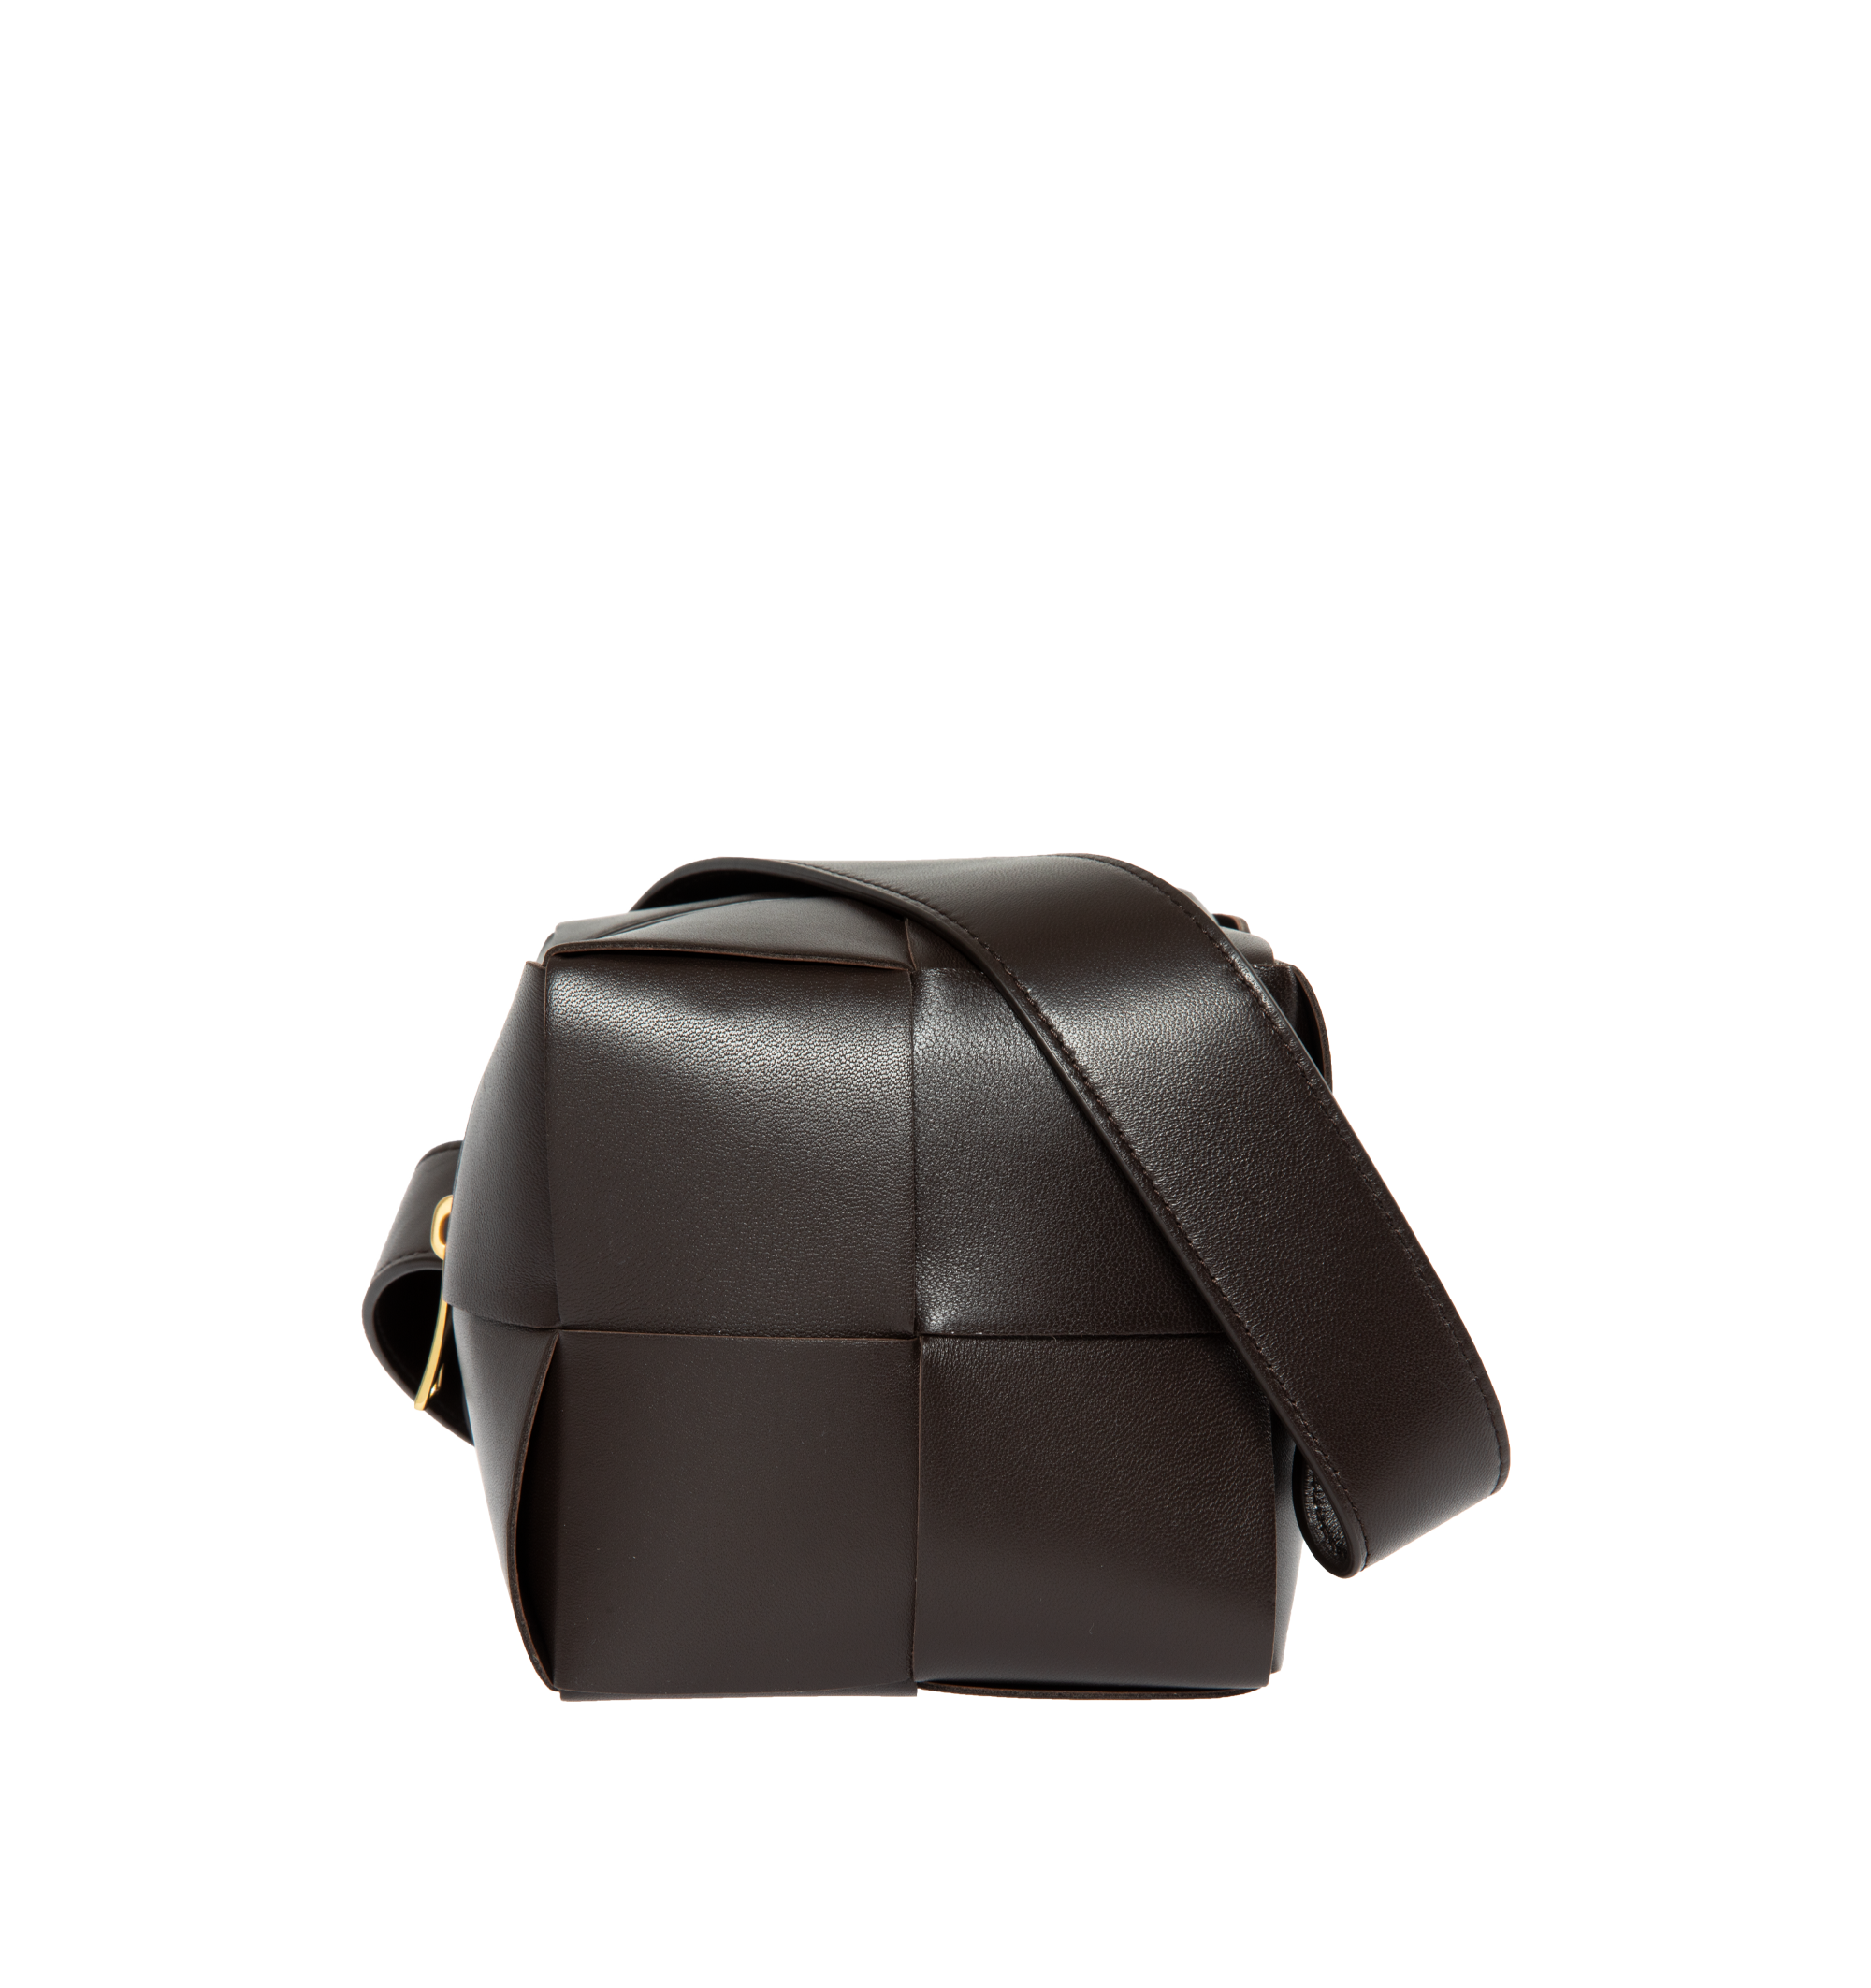 BOTTEGA VENETA: bag in woven leather - Green | BOTTEGA VENETA shoulder bag  710048V2E42 online at GIGLIO.COM